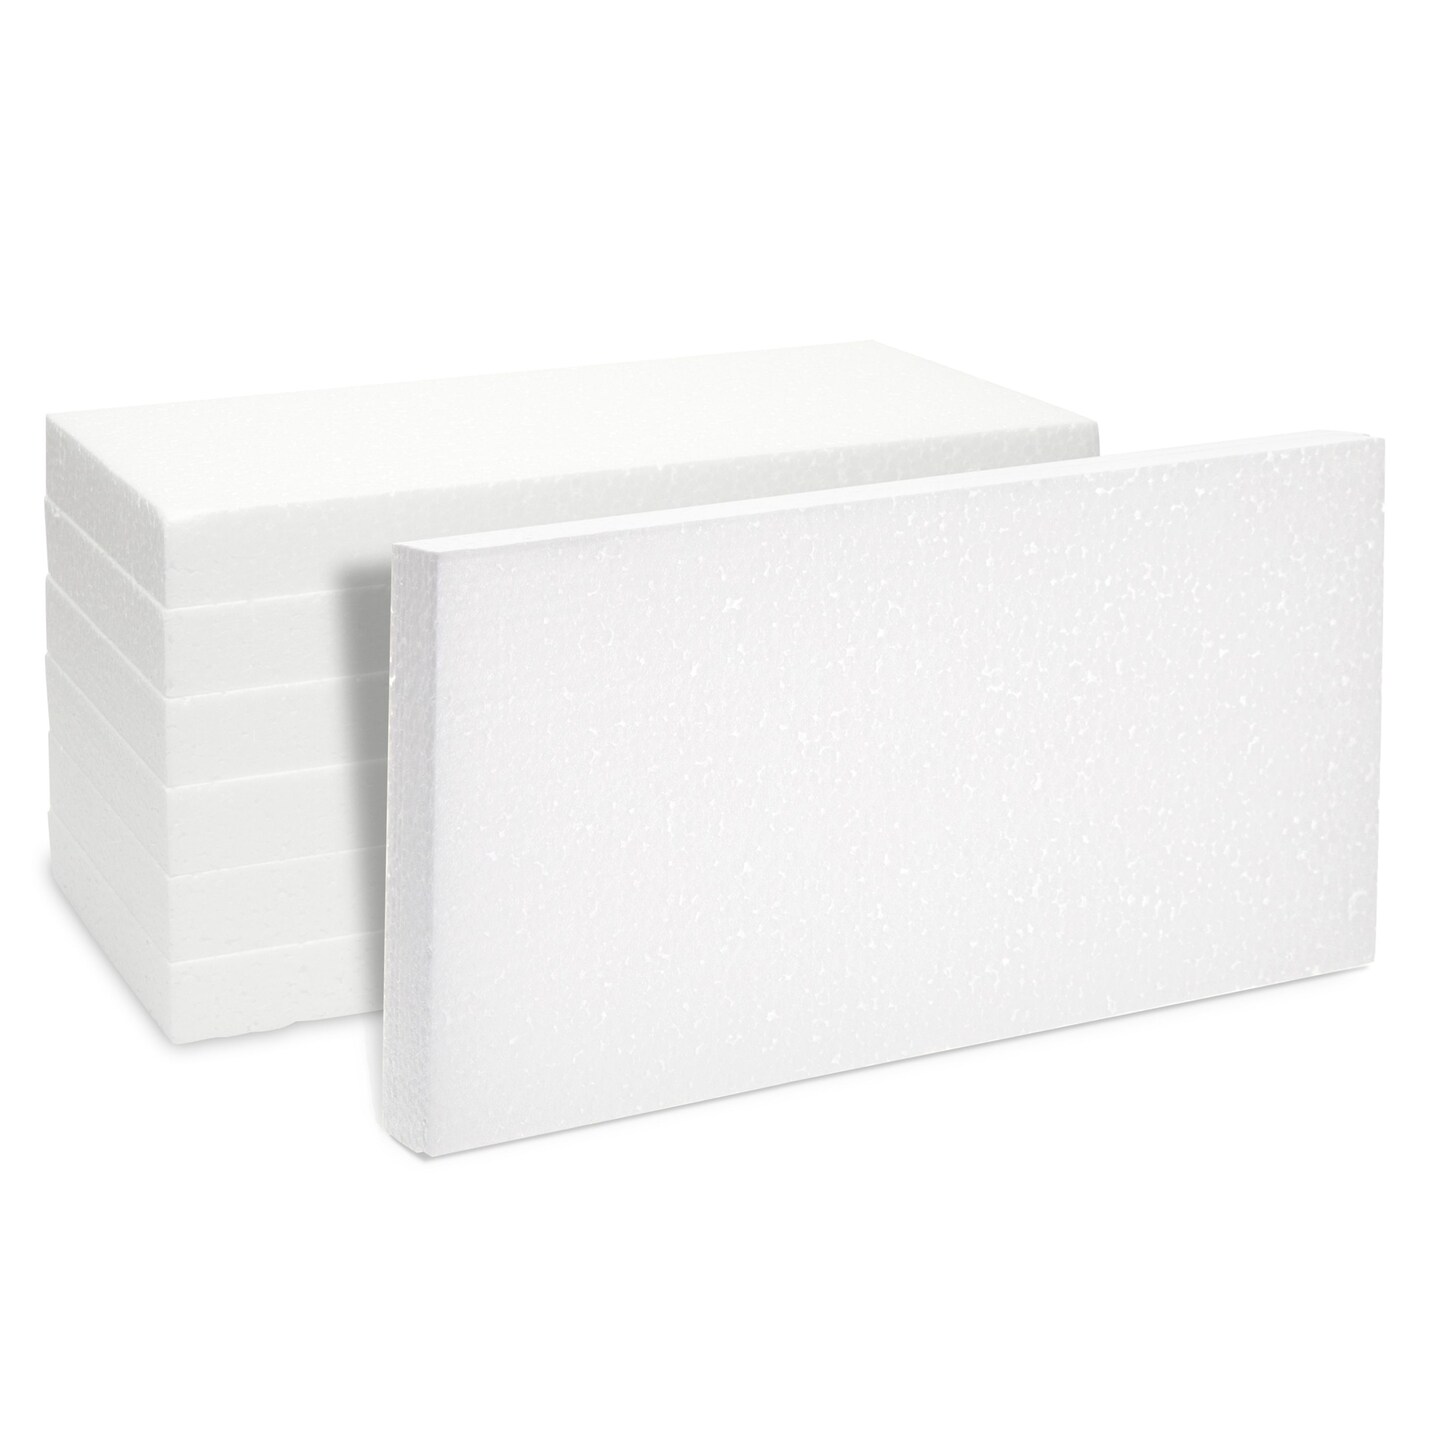 12 Pack Foam Blocks for Crafts, Polystyrene Brick Rectangles for